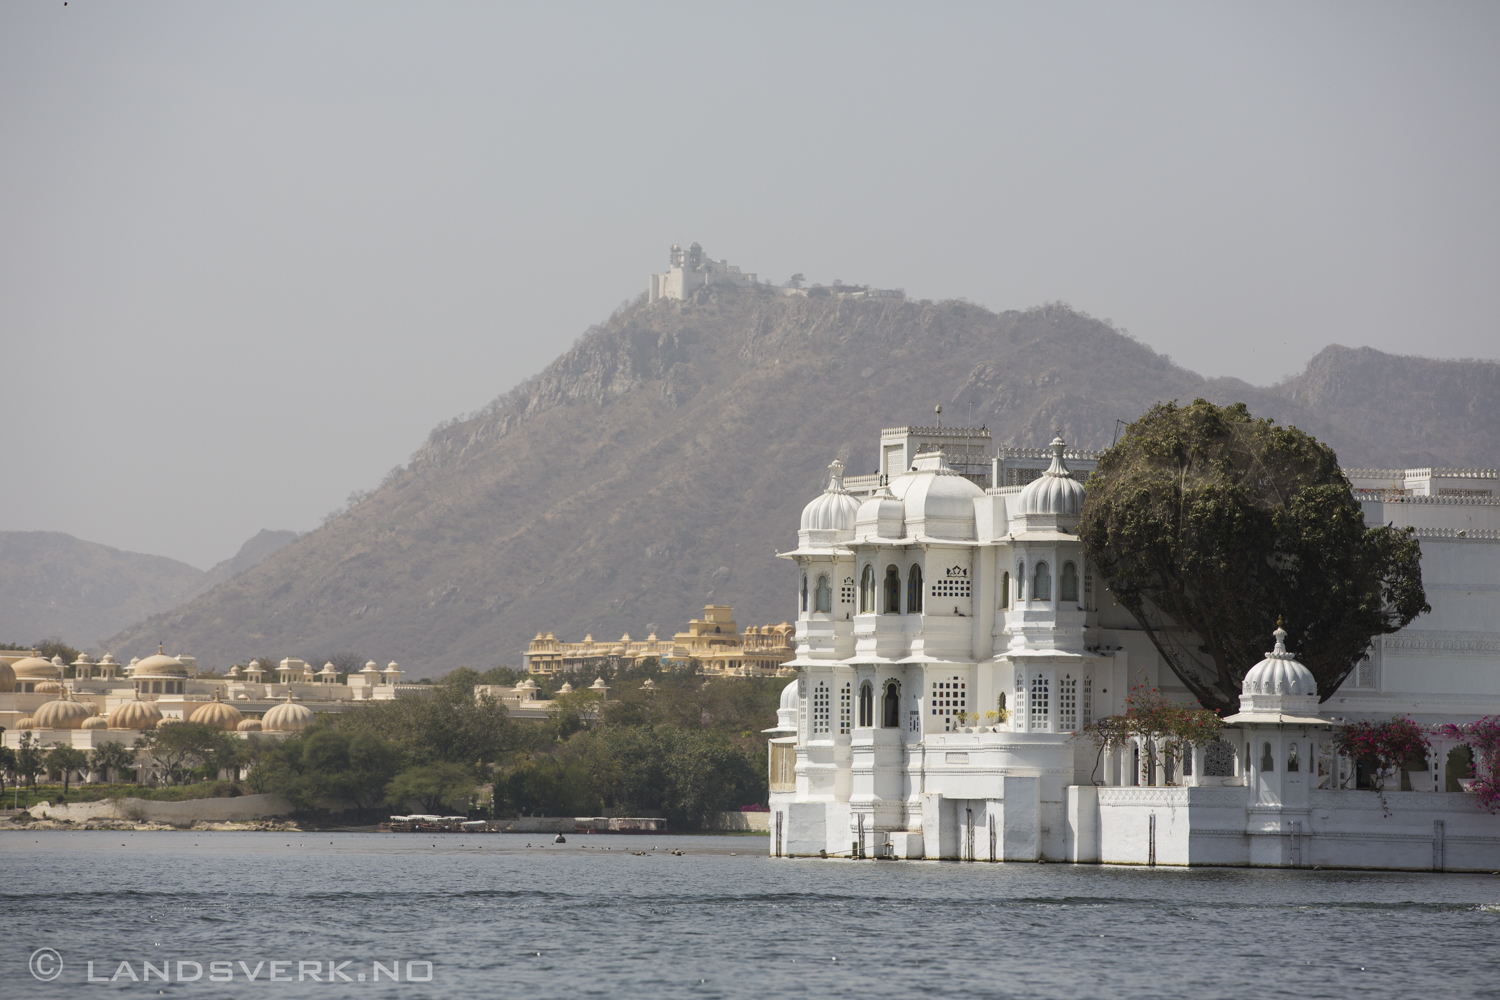 Udaipur Lake Palace in Lake Pichola. Udaipur, India. 

(Canon EOS 5D Mark III / Canon EF 70-200mm f/2.8 L IS II USM)